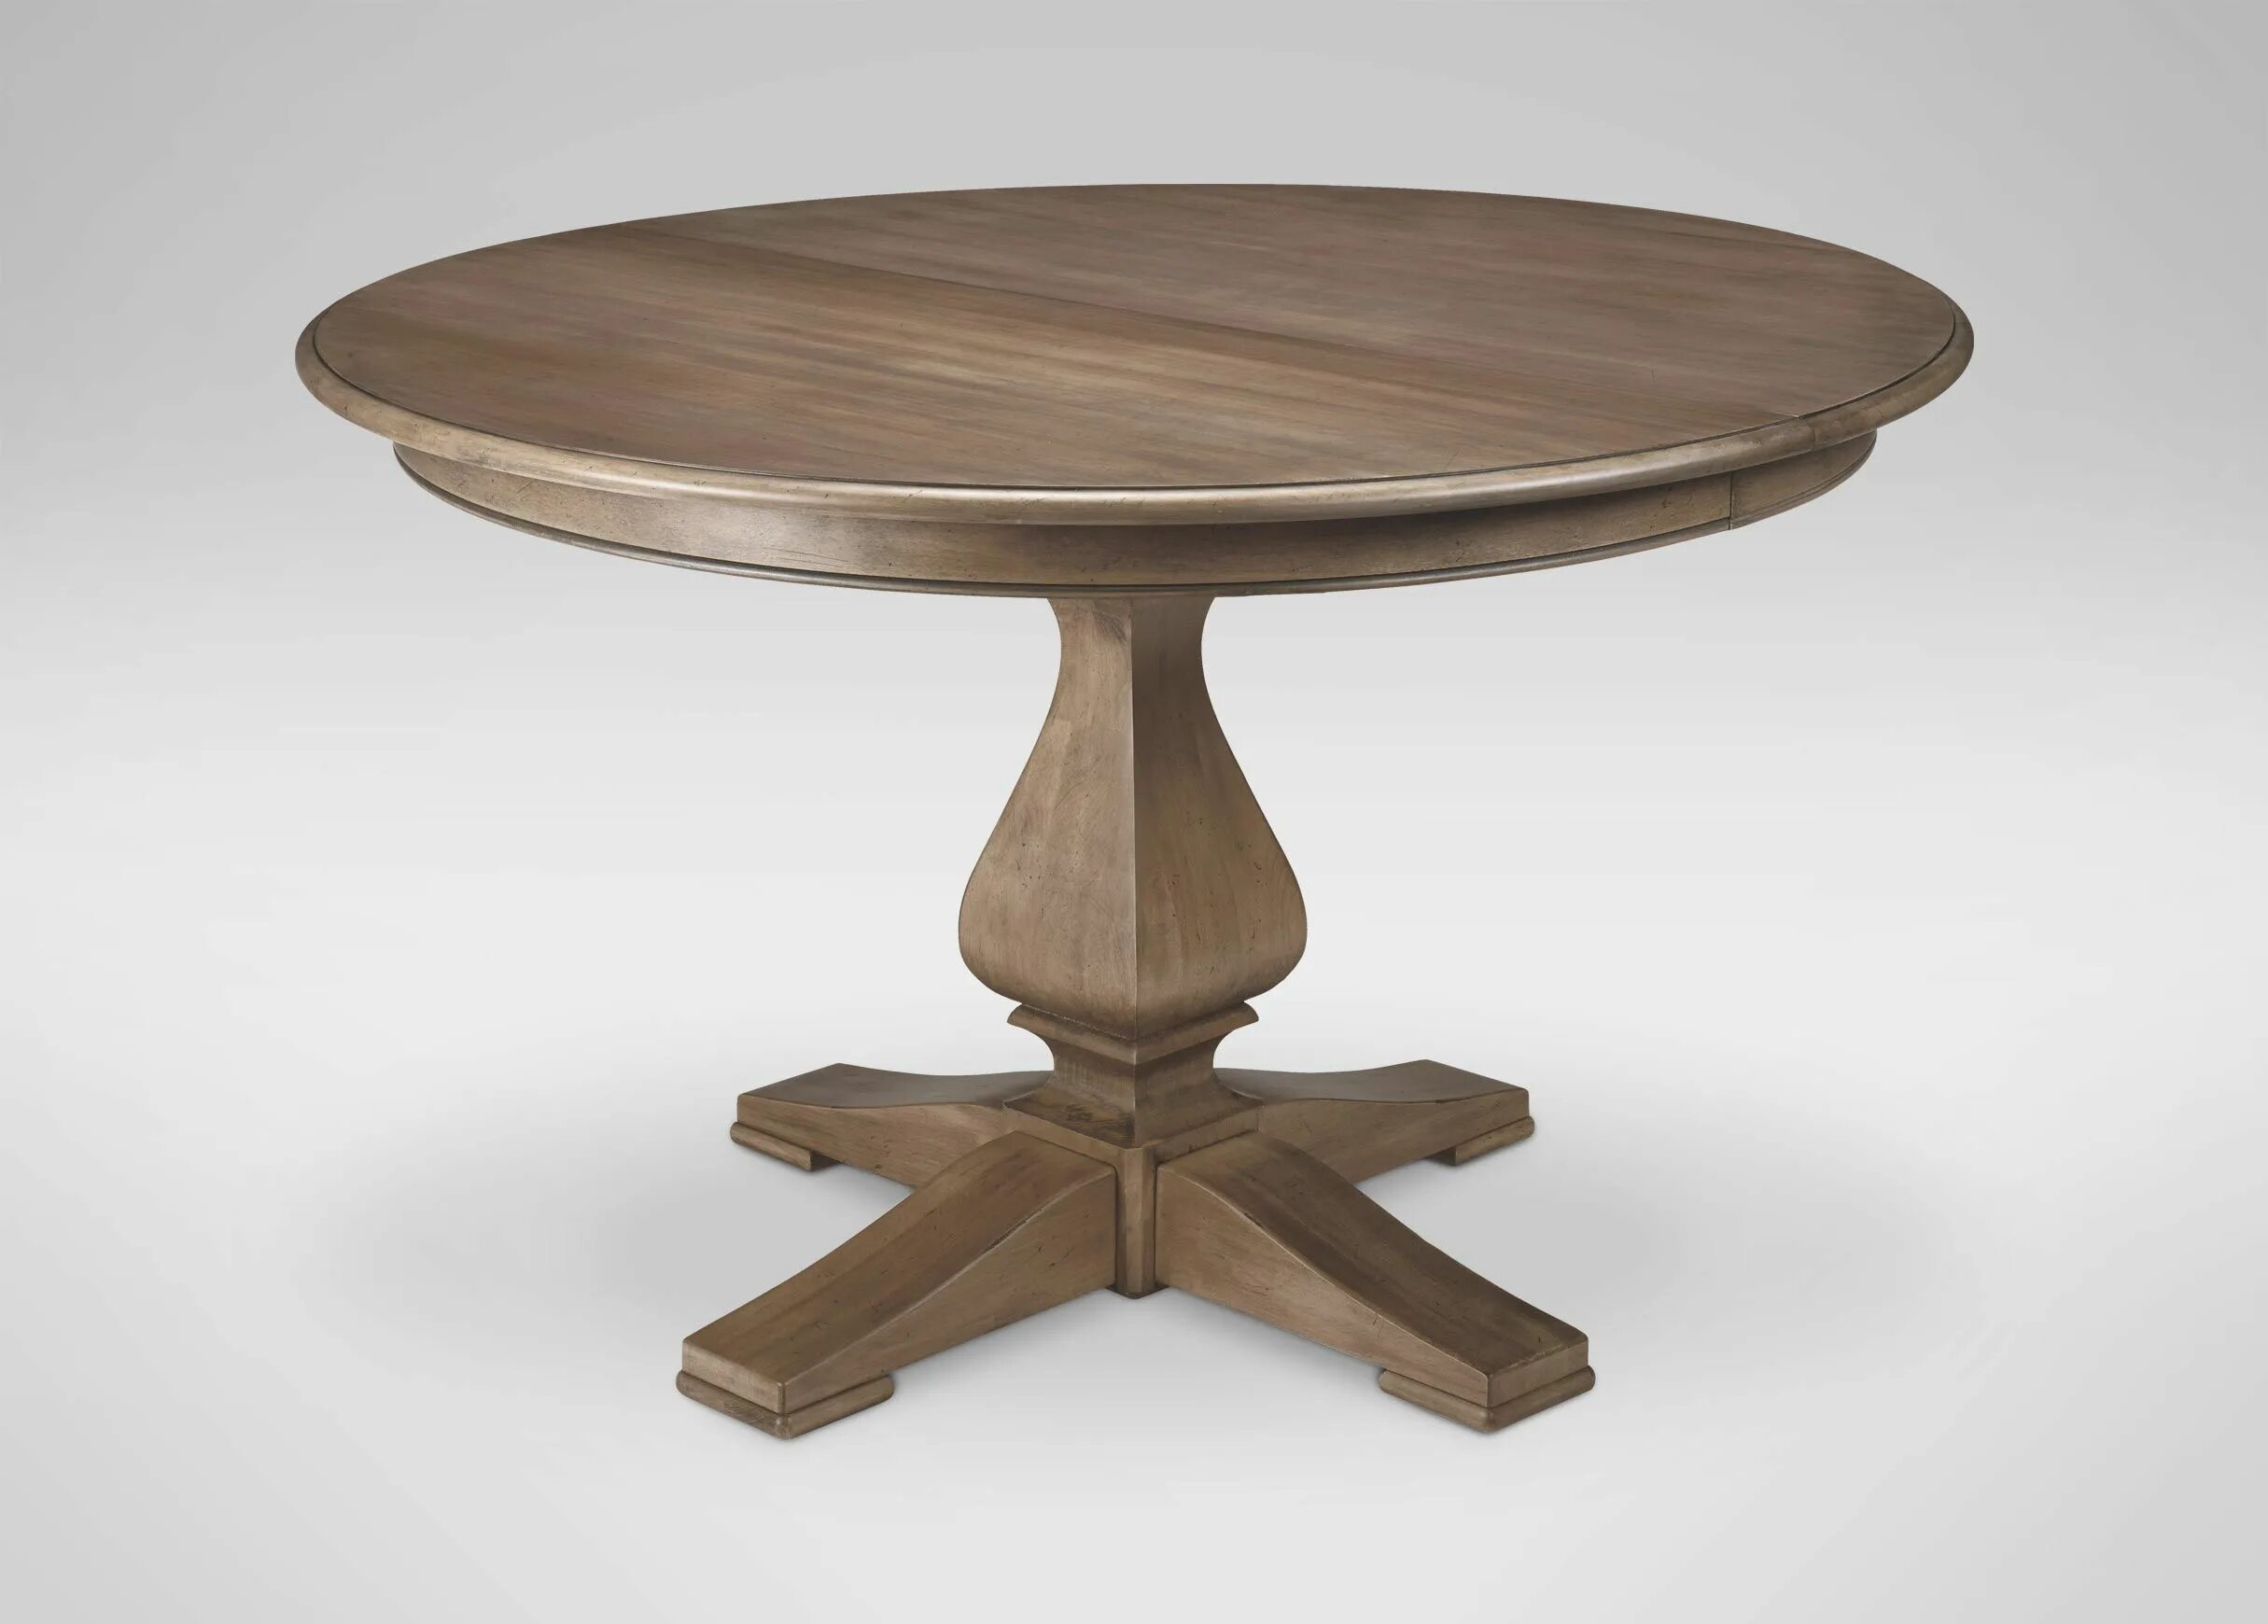 Стол круглый челябинск. Круглый стол Орион диаметр 120. Круглый деревянный стол. Стол круглый раздвижной. Круглый деревянный столик.